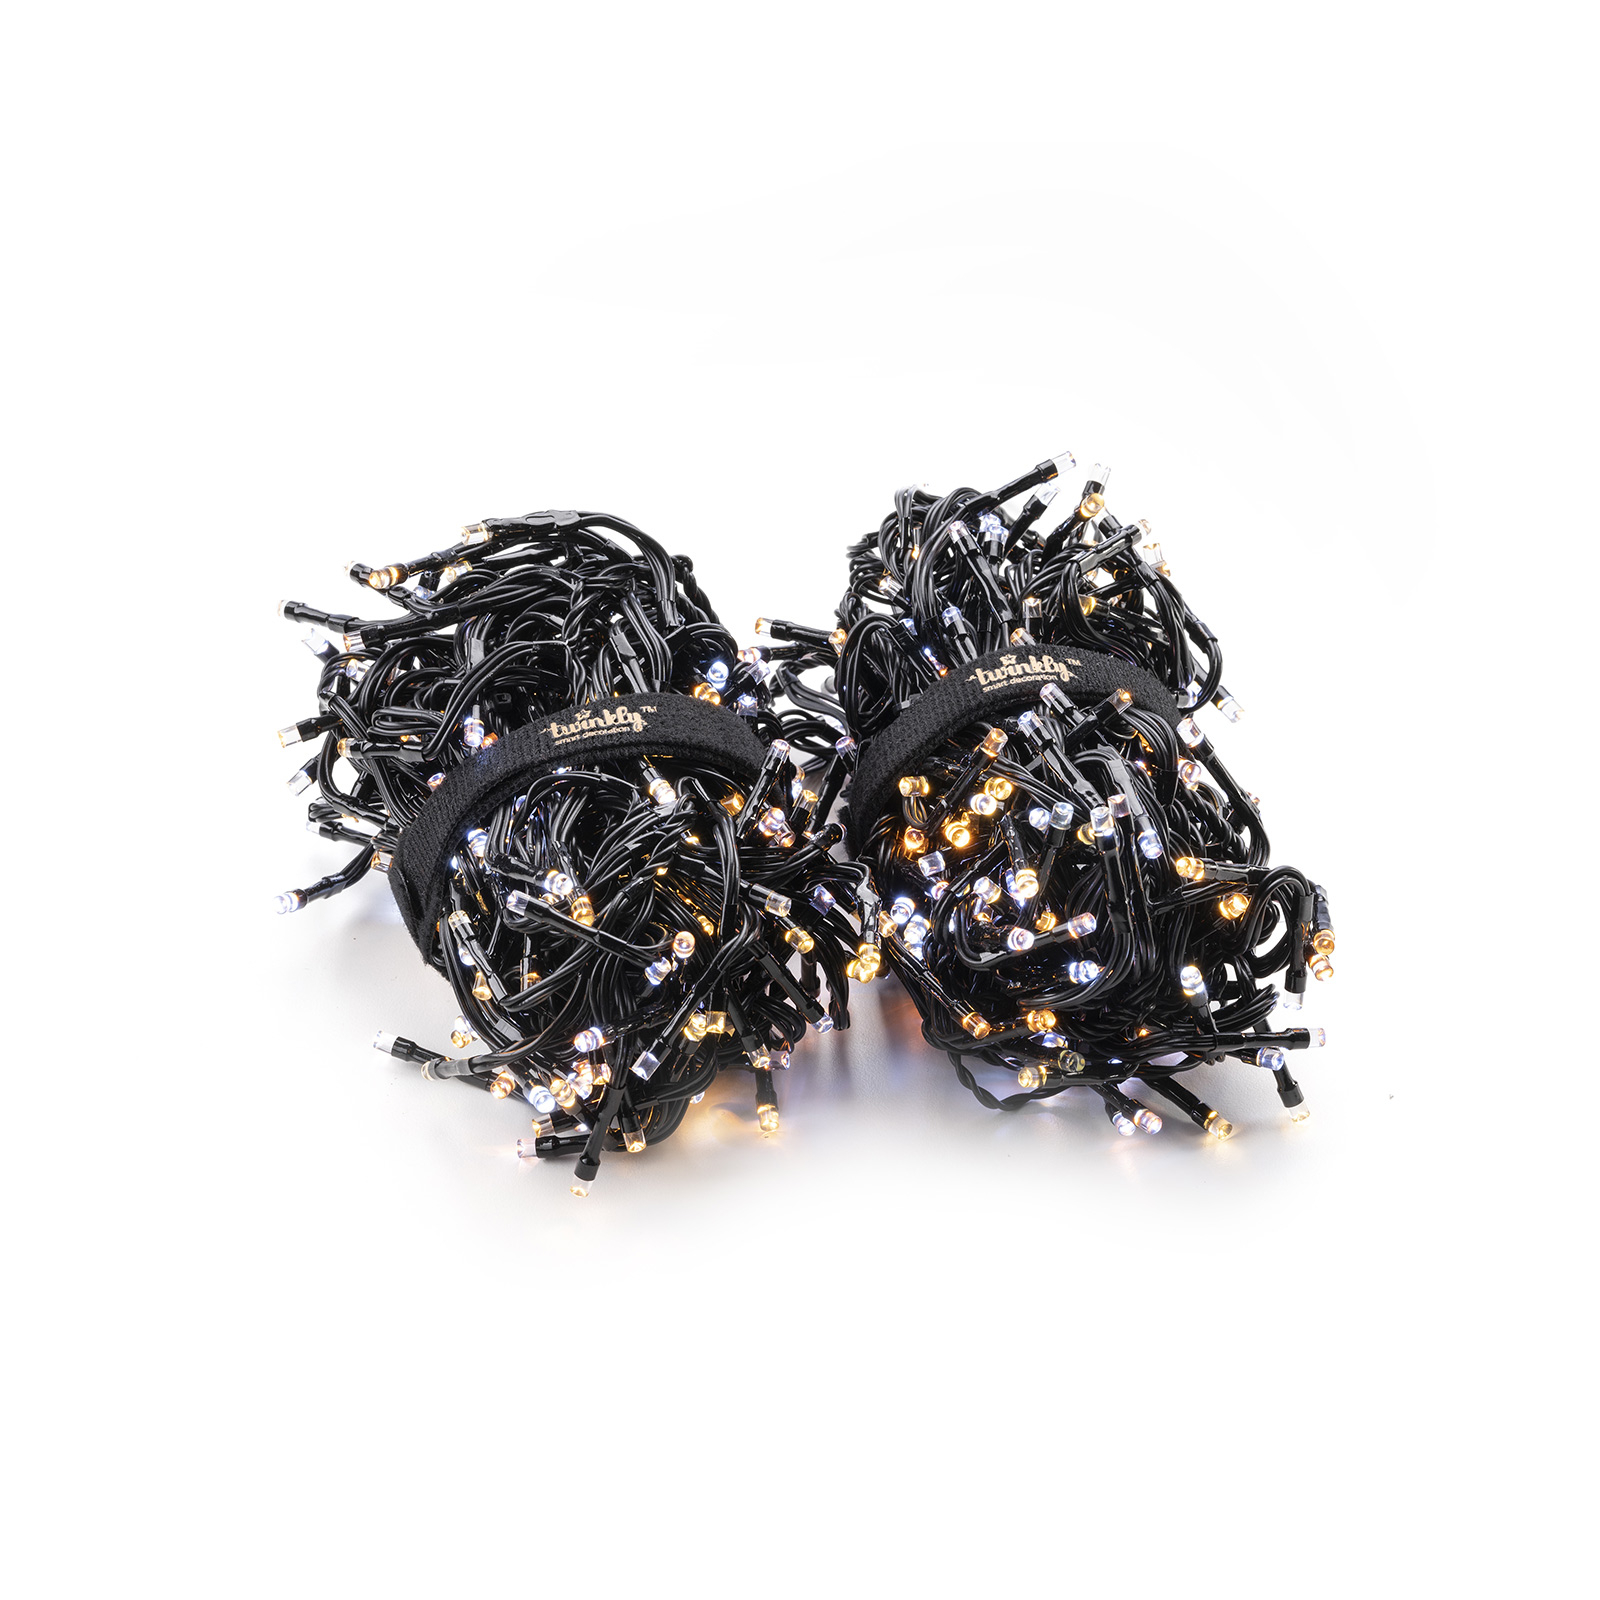 Cluster-Kette Twinkly CCT, schwarz, 400-flammig 6m